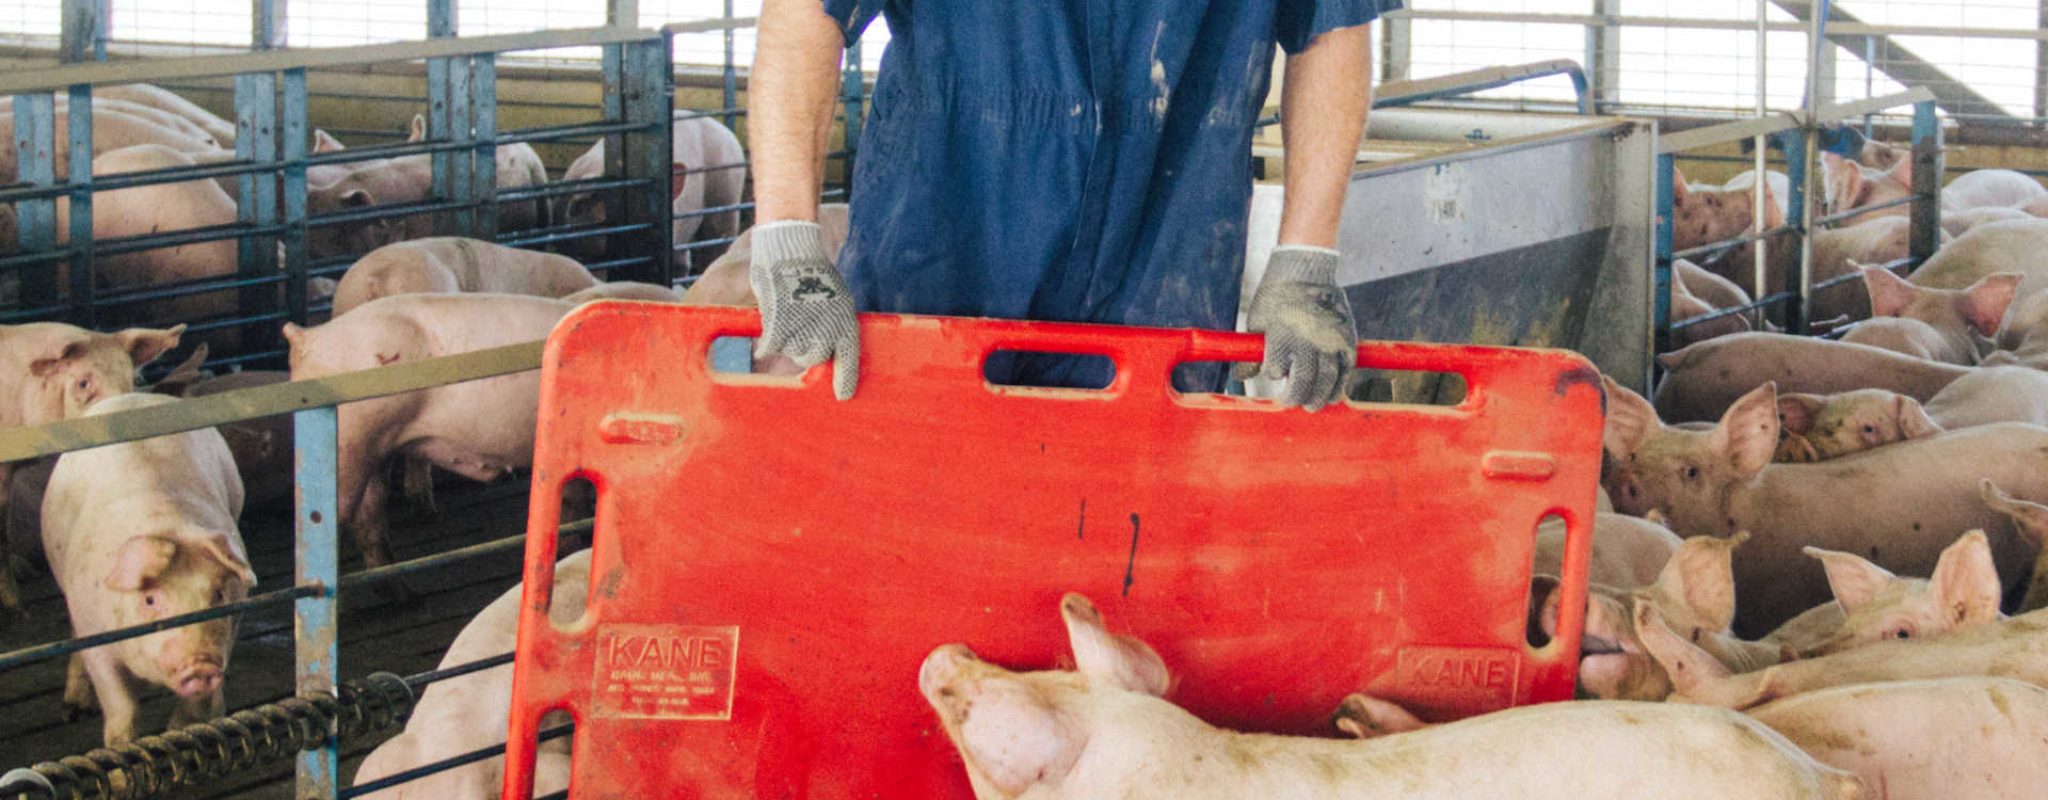 Low-stress livestock handling makes safety and economic sense